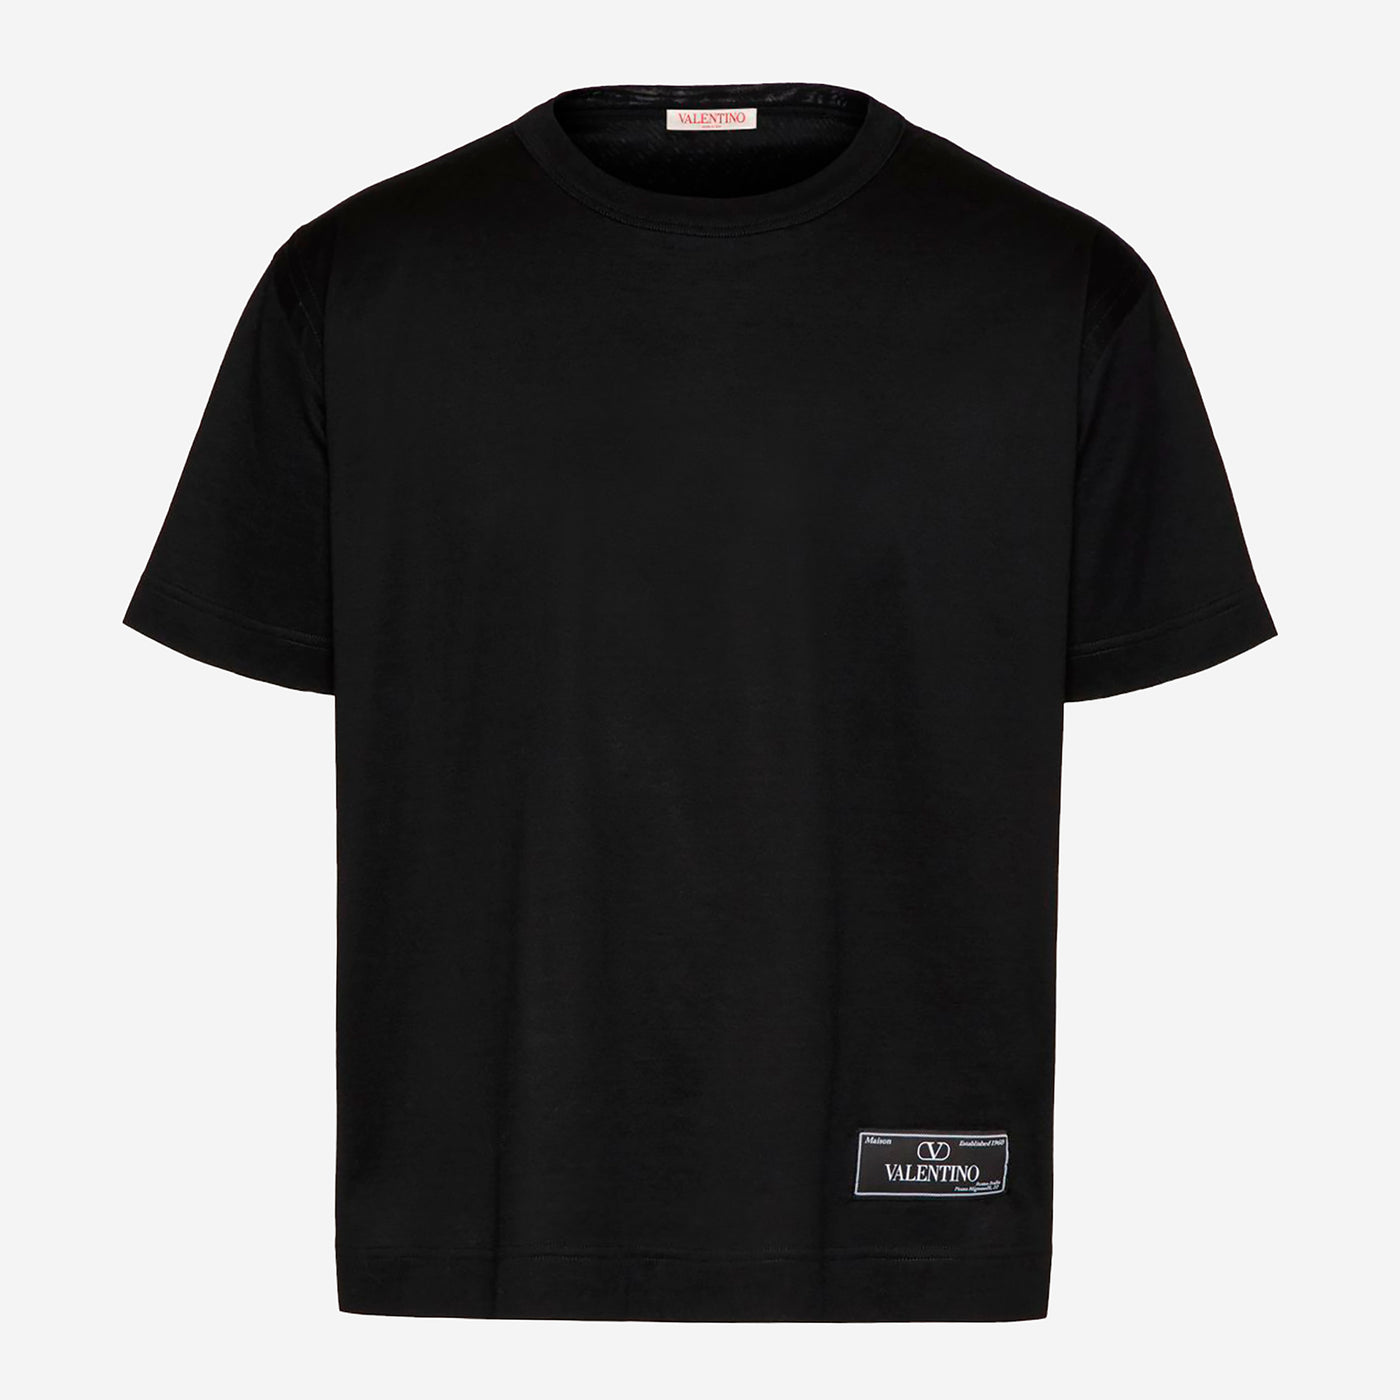 Valentino Tailoring Label T-Shirt